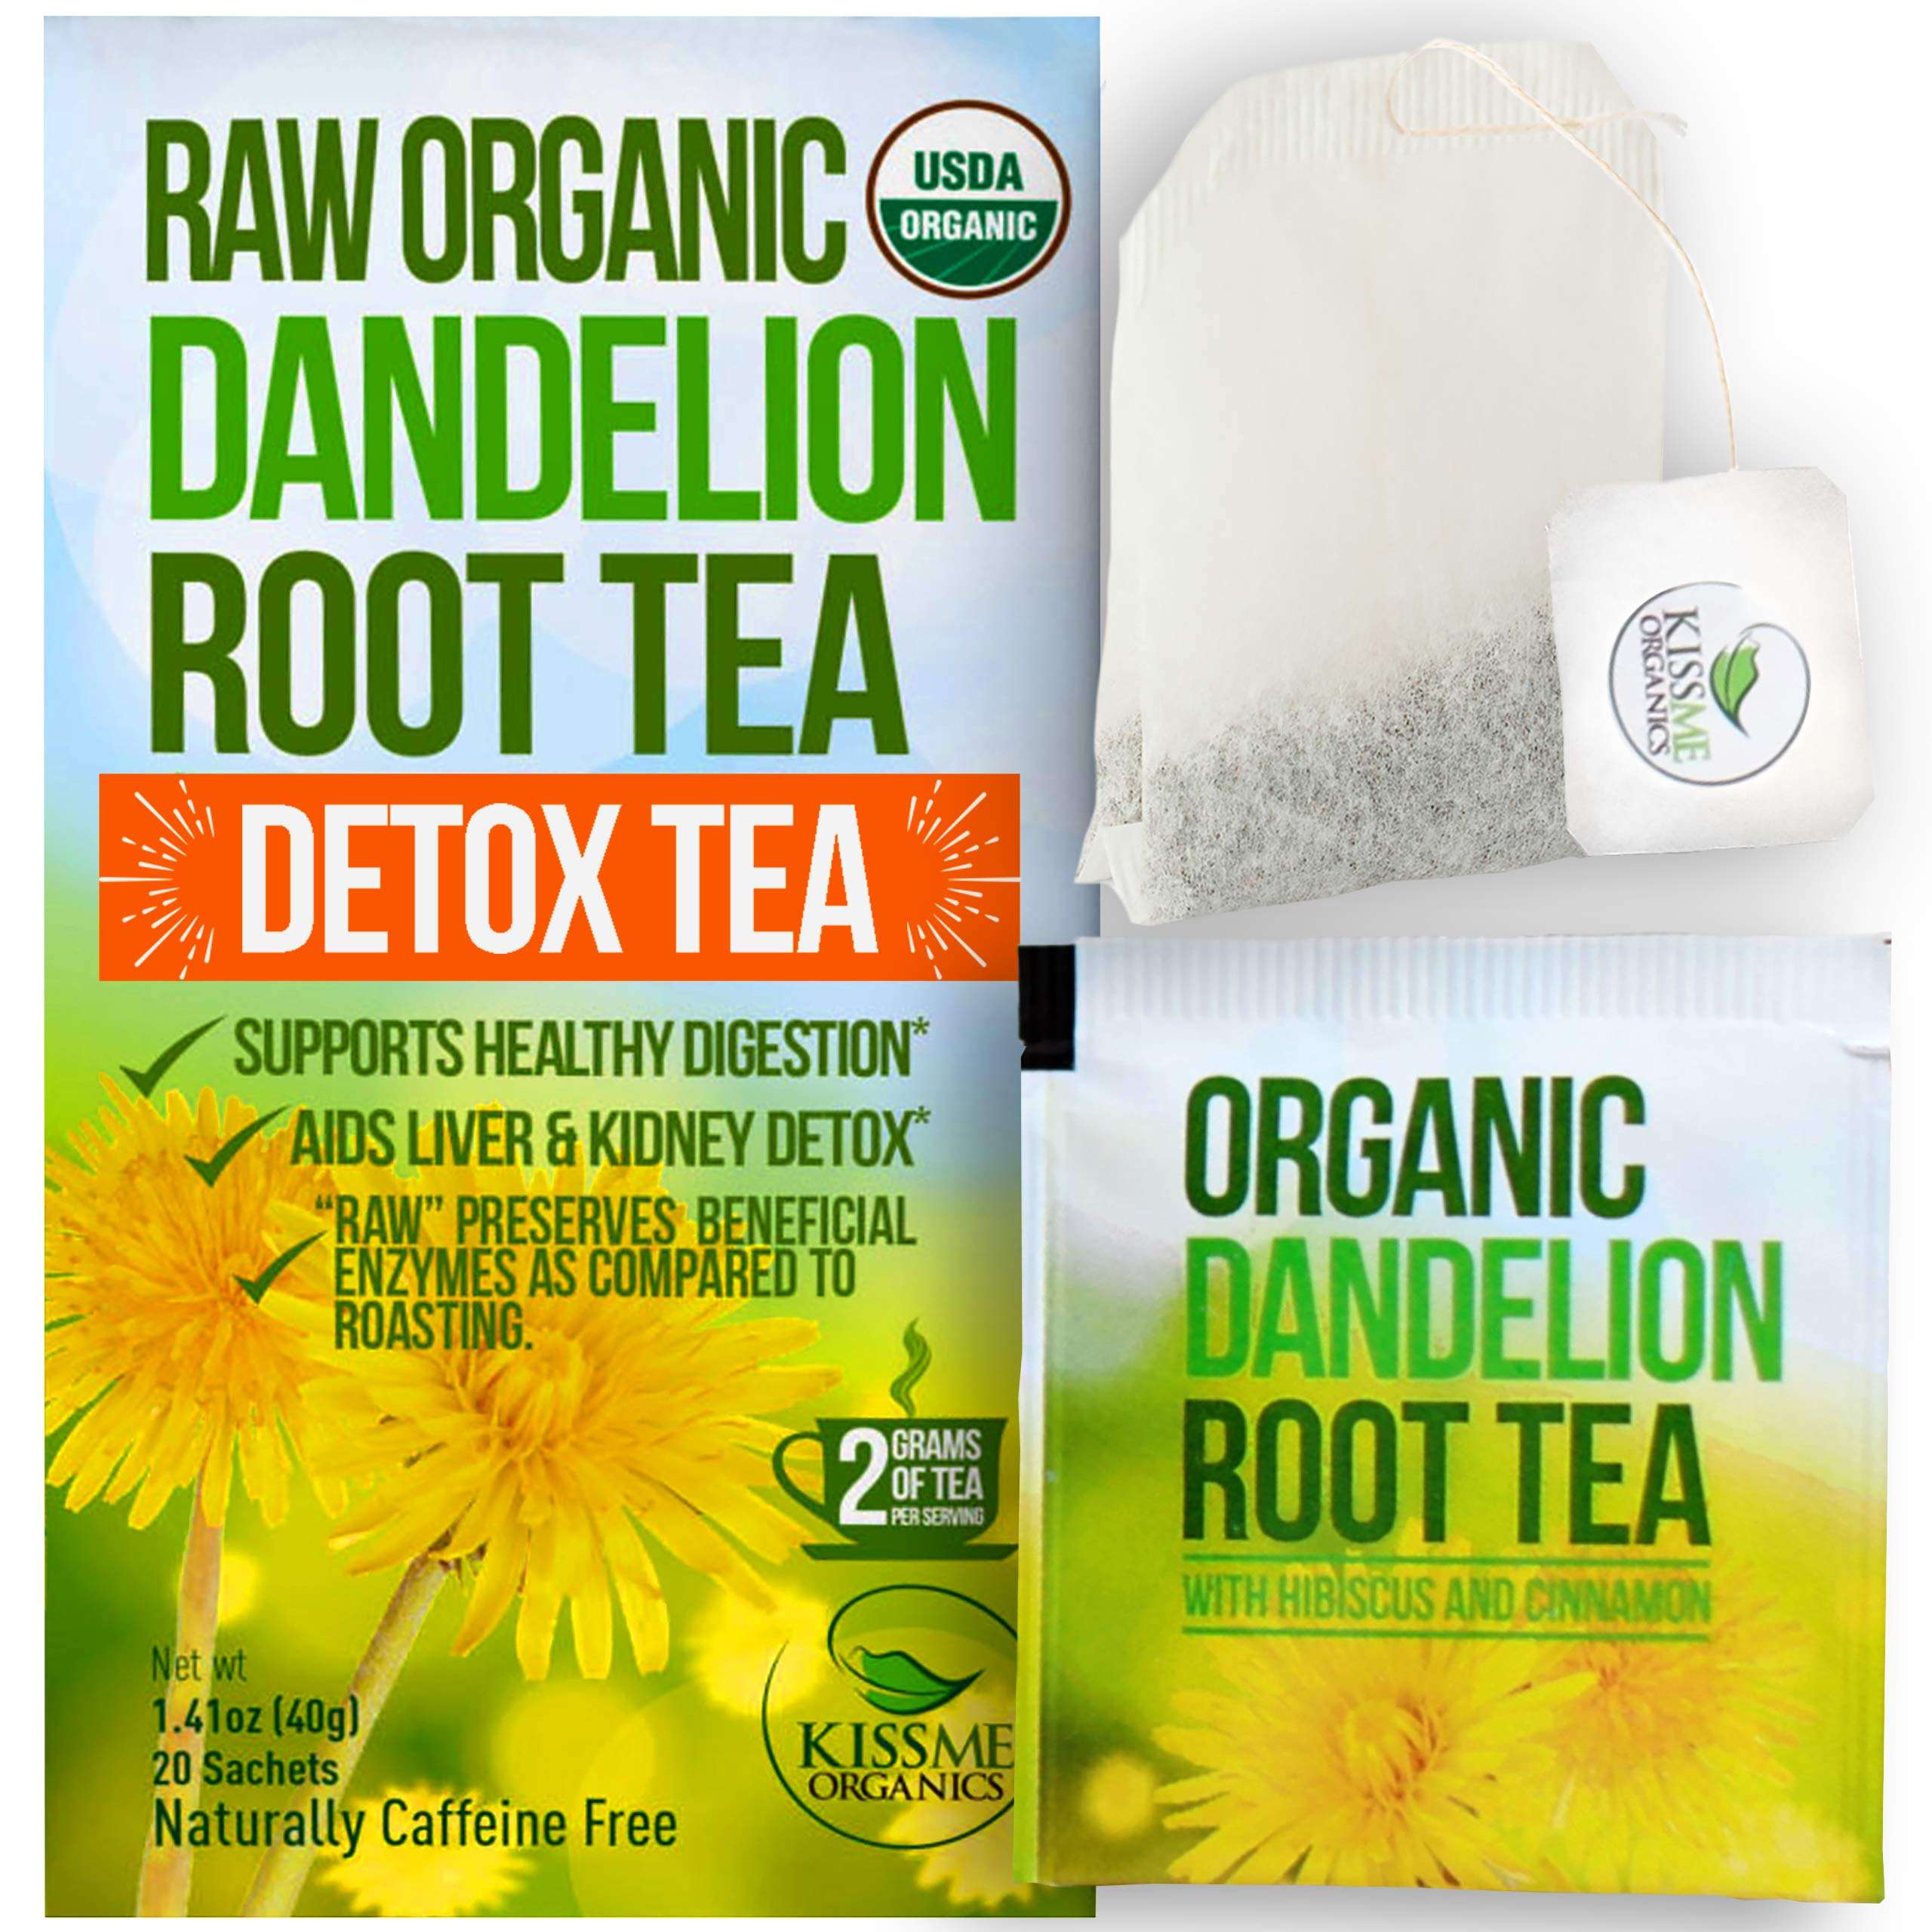 Dandelion Root Tea Detox Tea